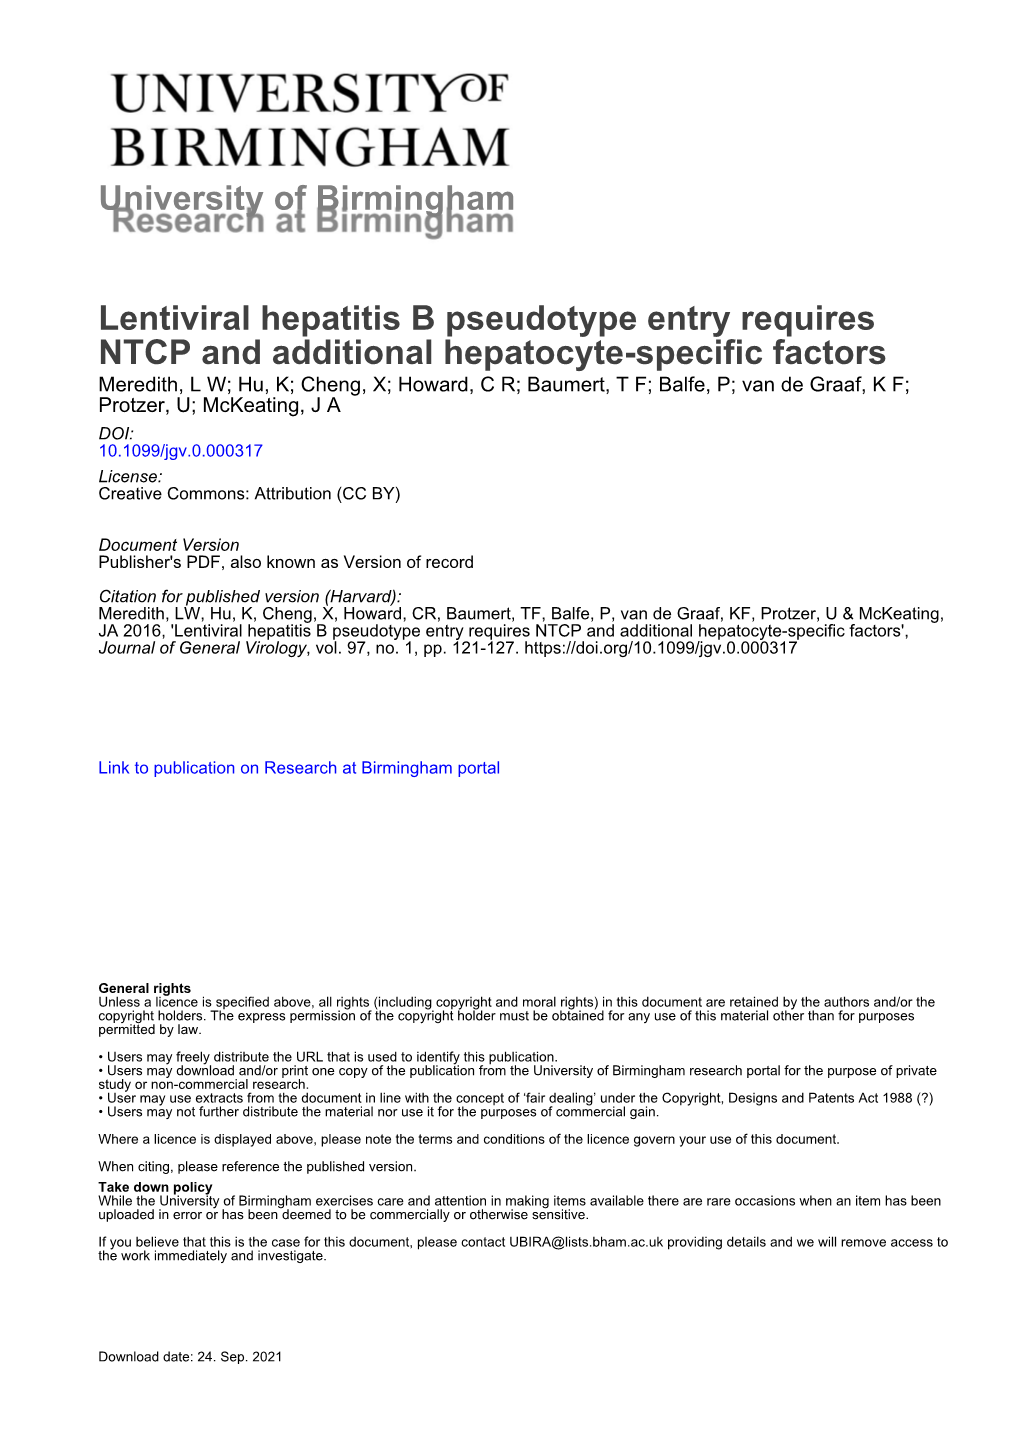 University of Birmingham Lentiviral Hepatitis B Pseudotype Entry